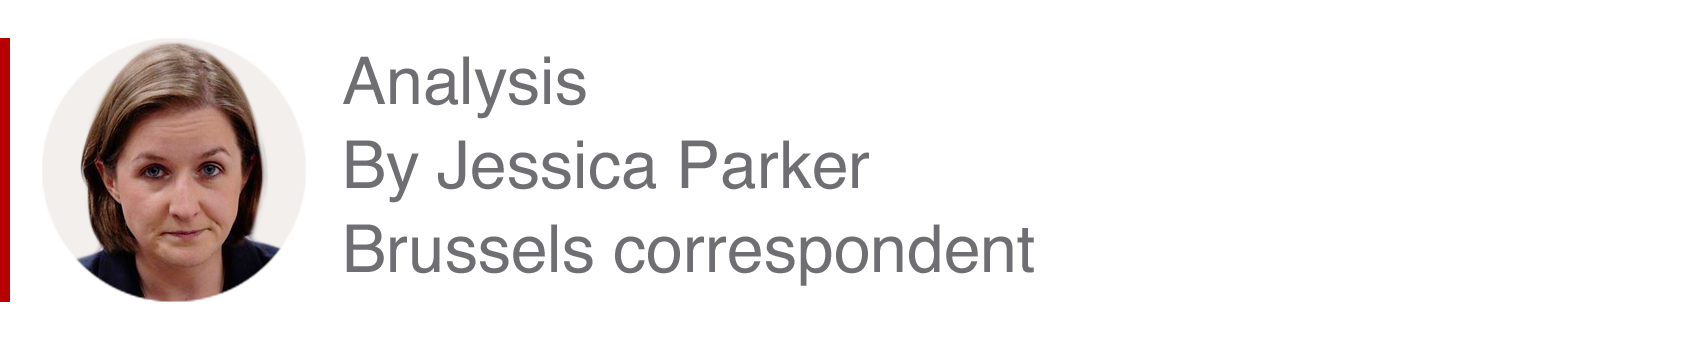 Jessica Parker correspondent box